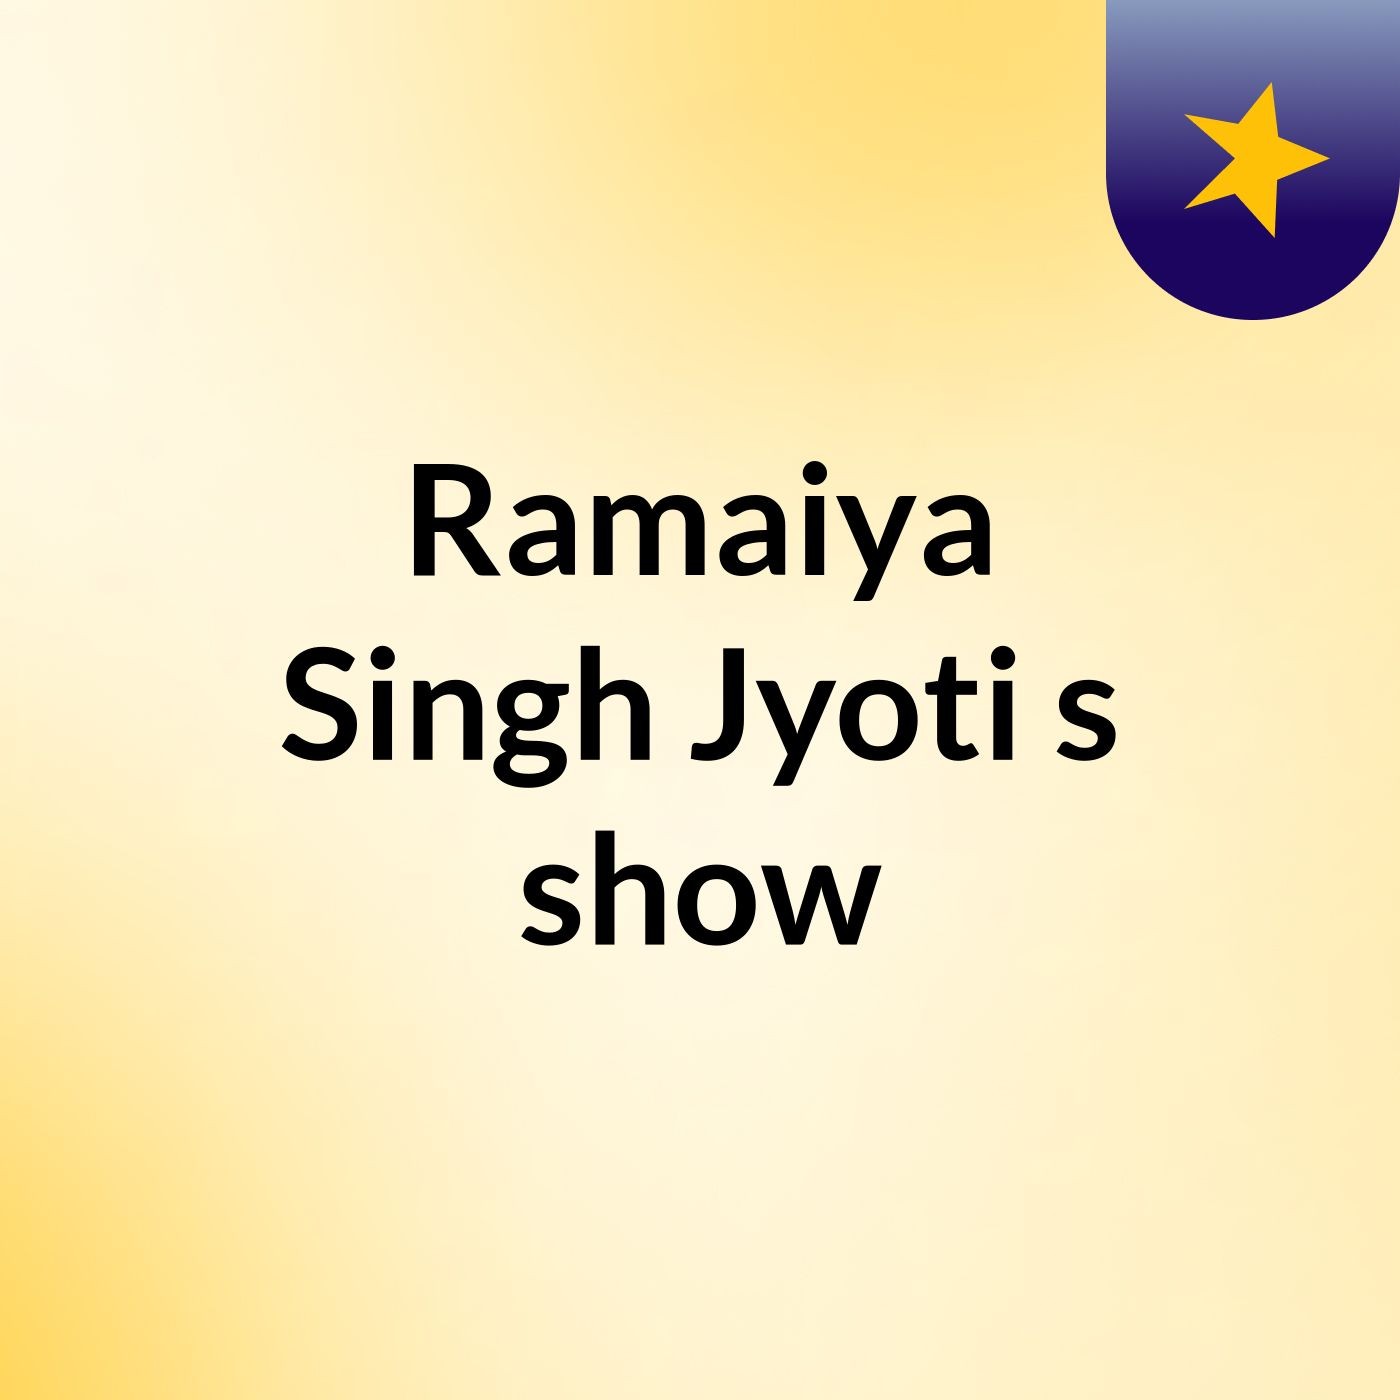 Ramaiya Singh Jyoti's show